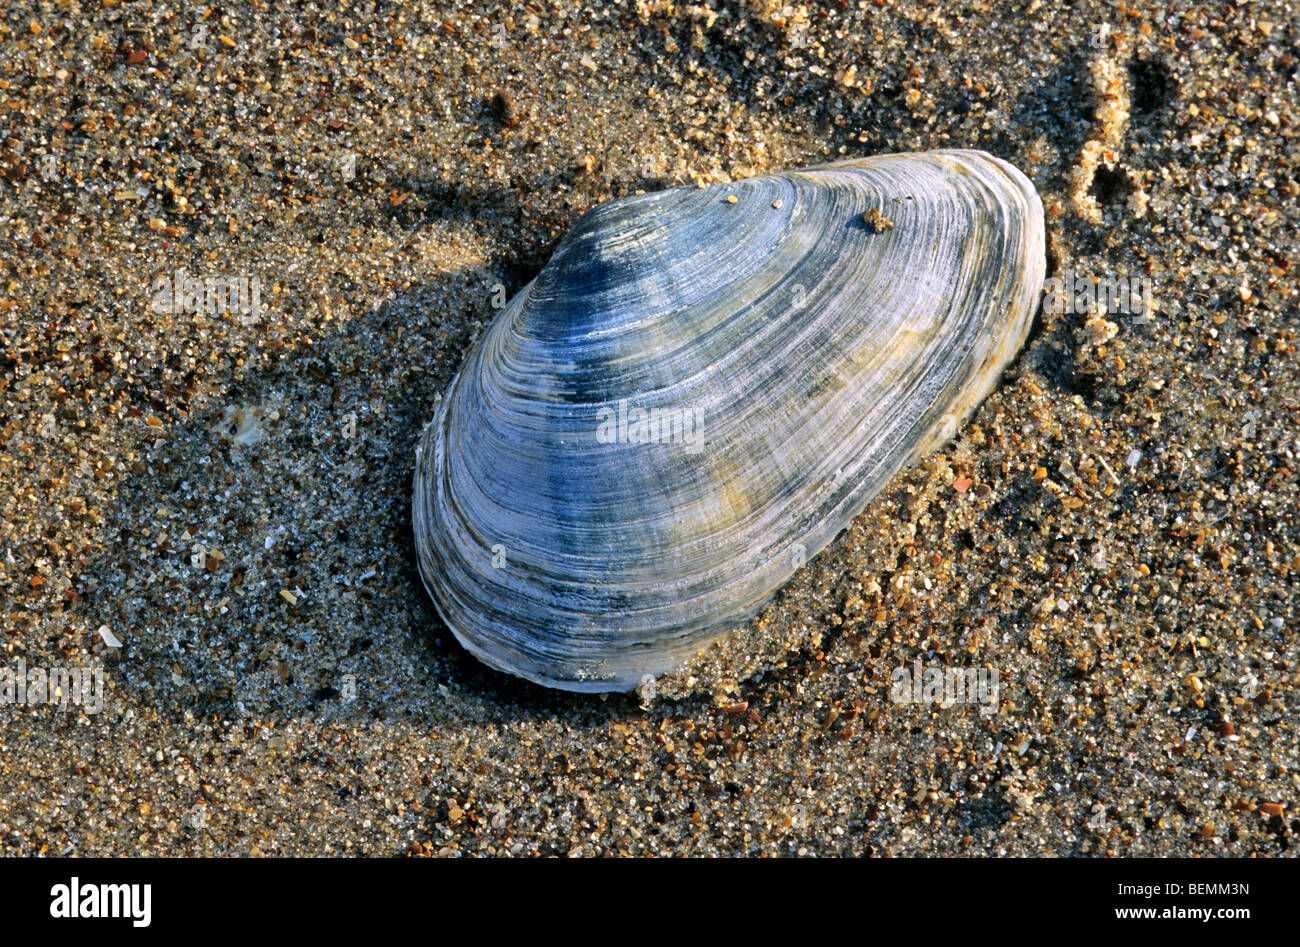 Soft-shell clam / Steamer / Softshell (Mya arenaria) on beach, Belgium Stock Photo